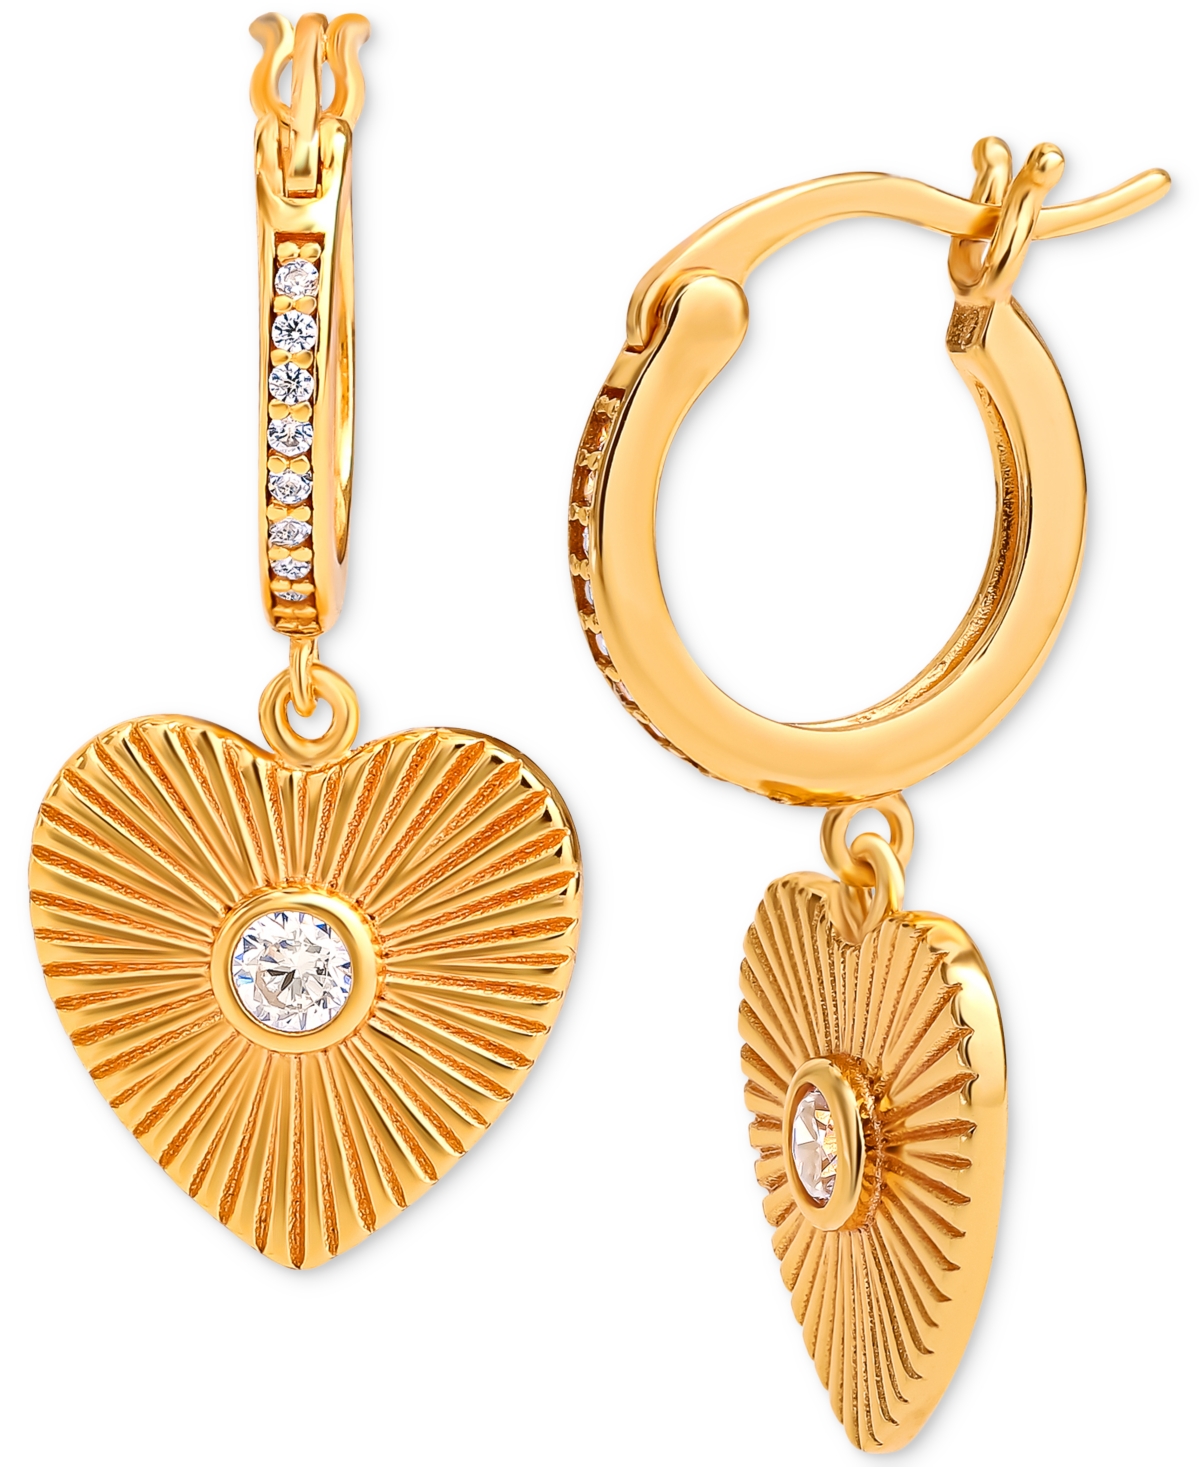 Giani Bernini Cubic Zirconia Heart Dangle Hoop Earrings In 18k Gold-plated Sterling Silver, Created For Macy's